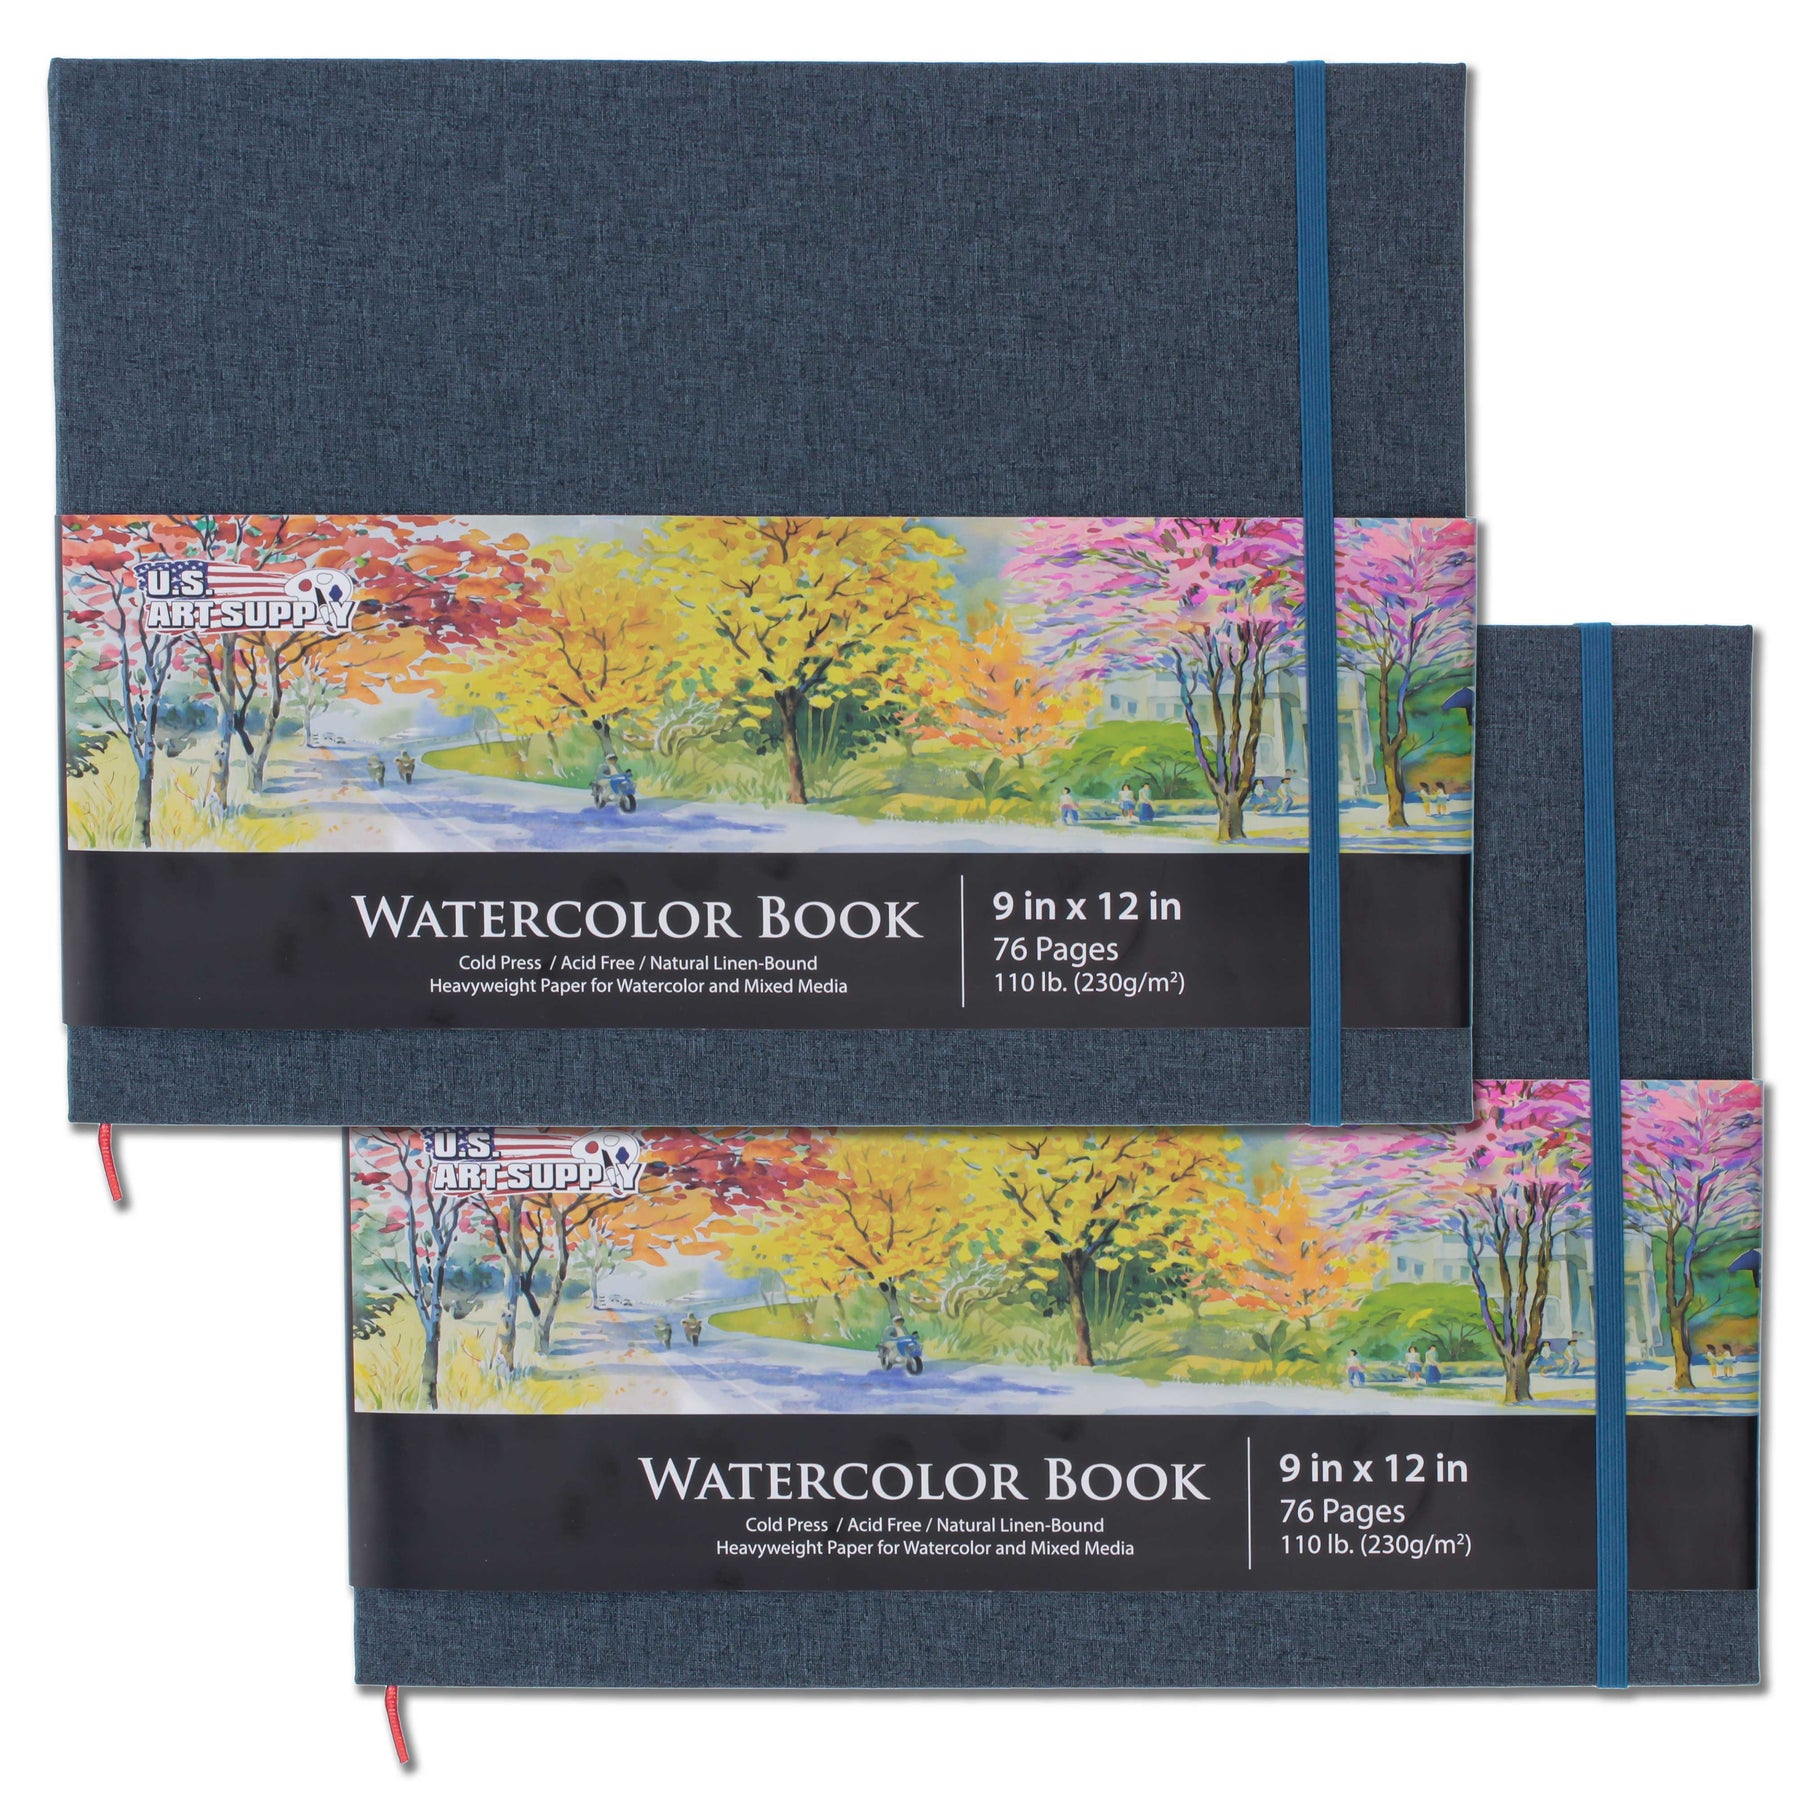 Watercolor Workbook: Nature